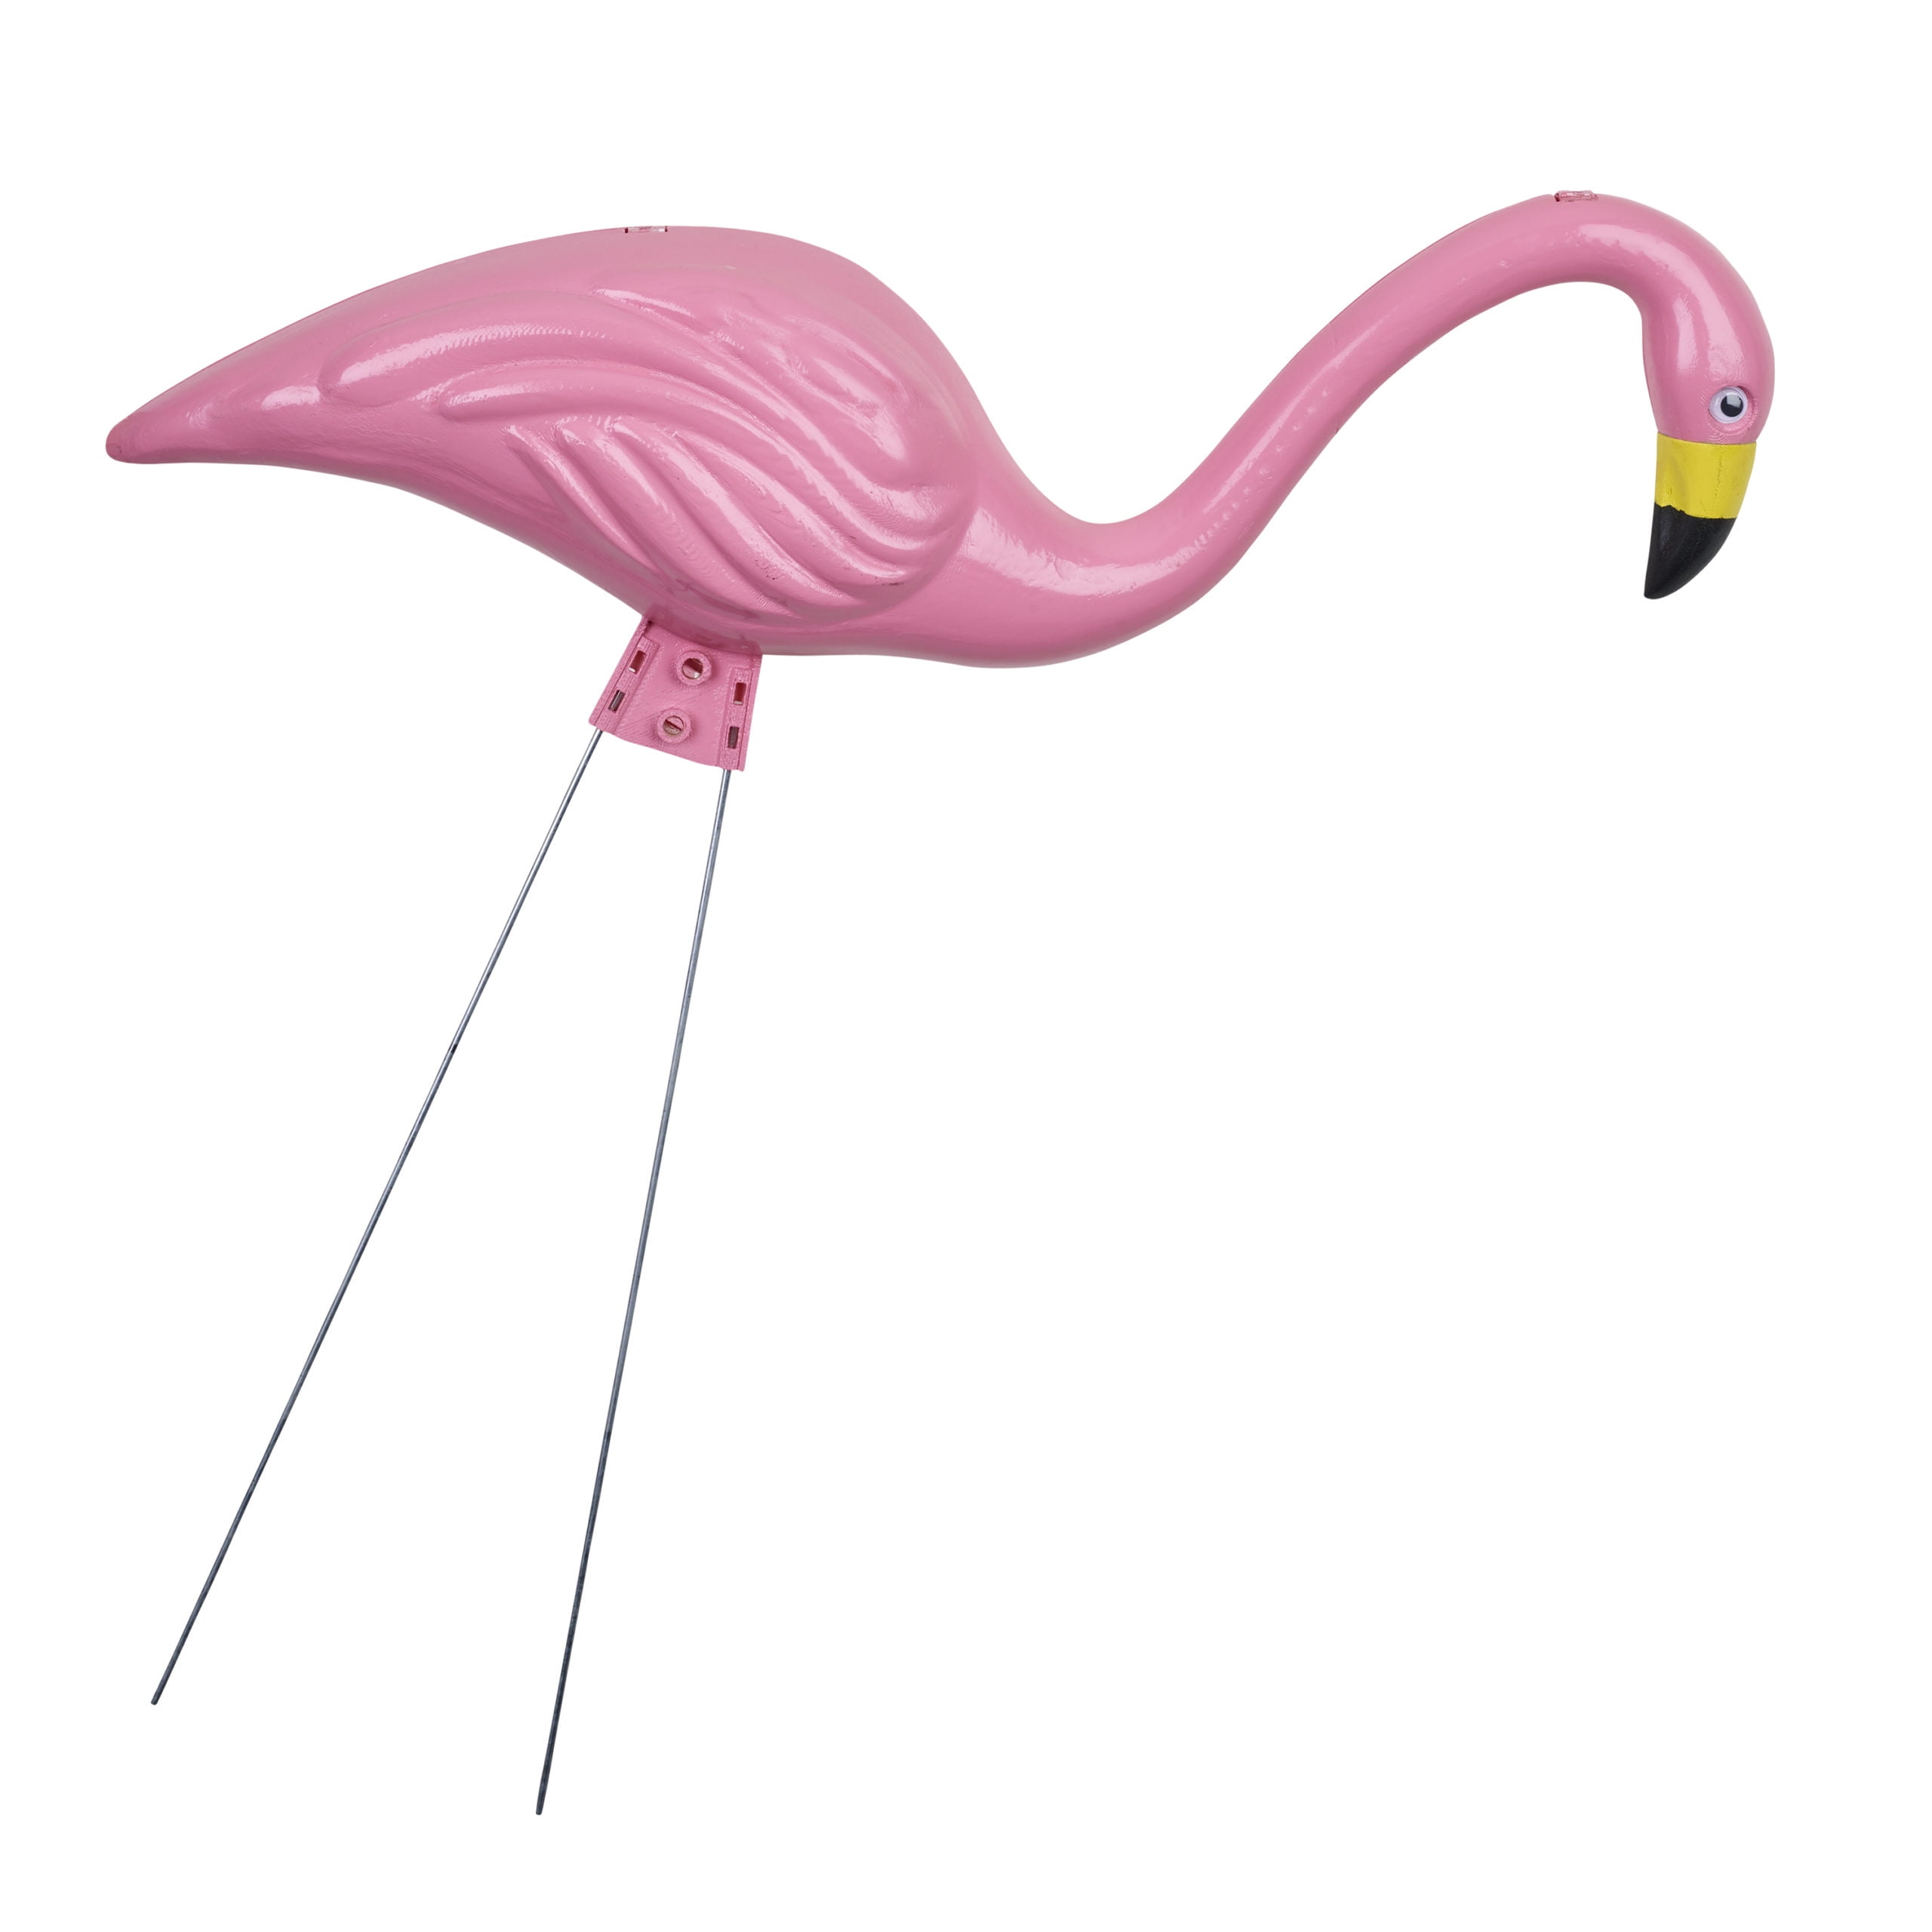 Plastic Pink Flamingo Outdoor Garden Statue Lawn Animal Statue Craft Ornament 